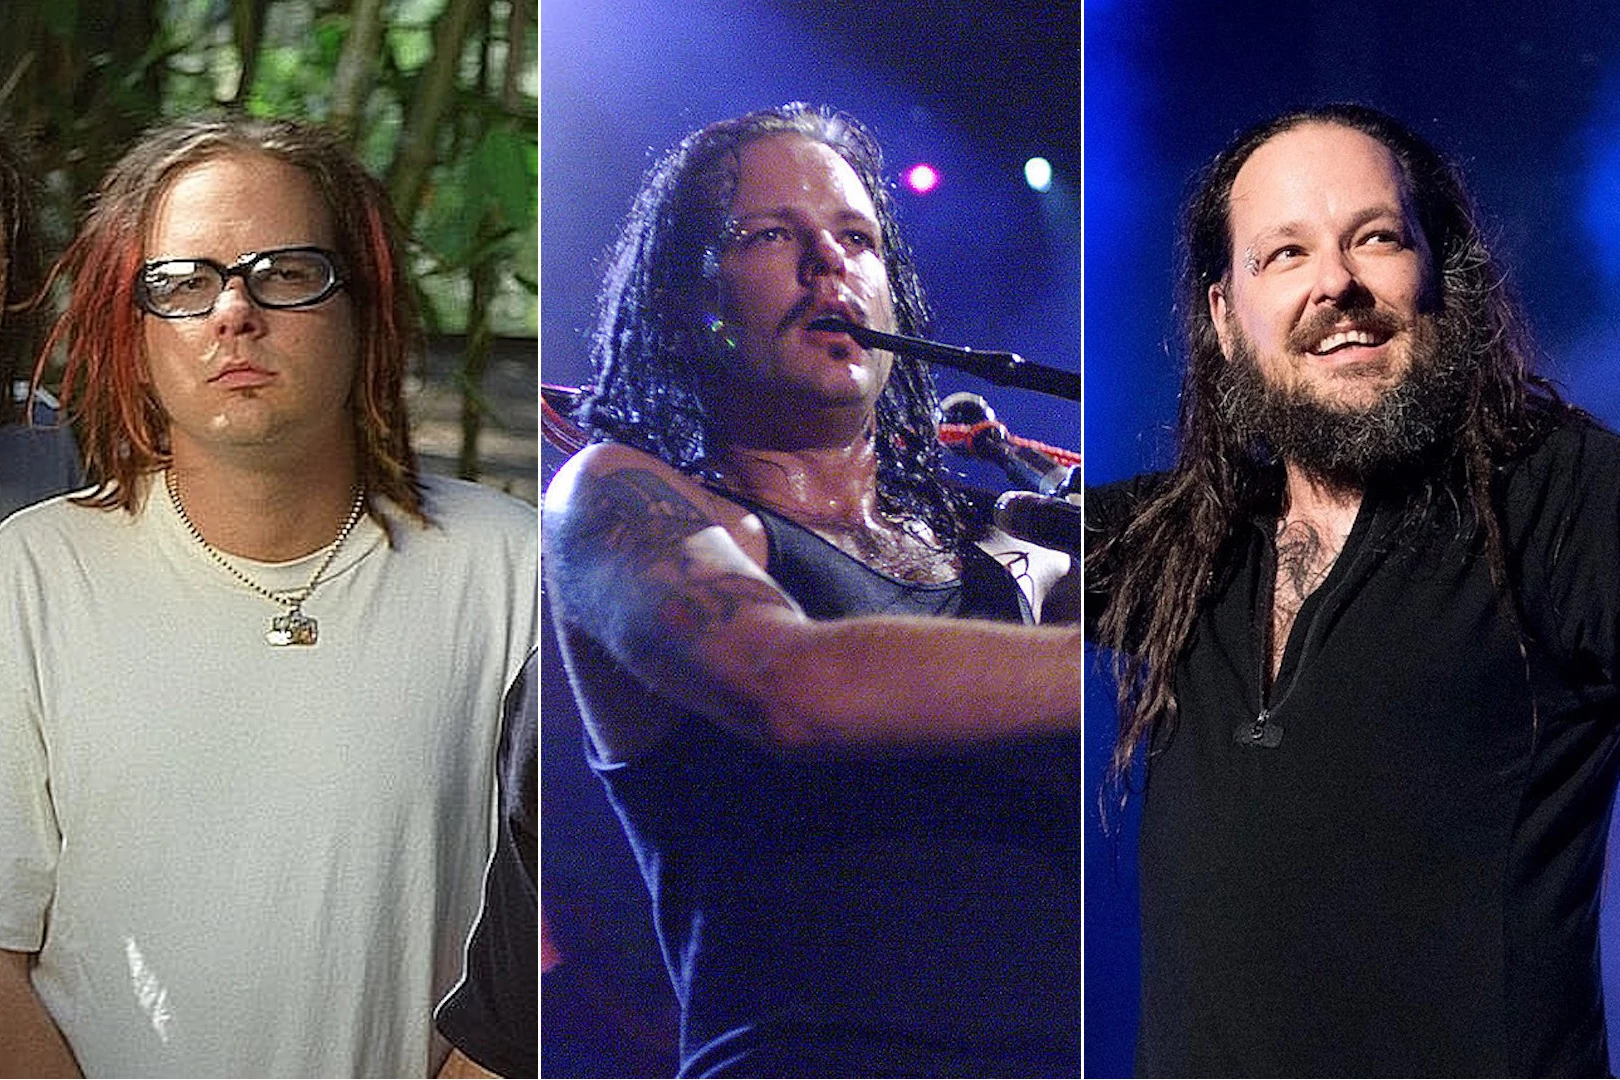 See Photos of Korn's Jonathan Davis Through the Years